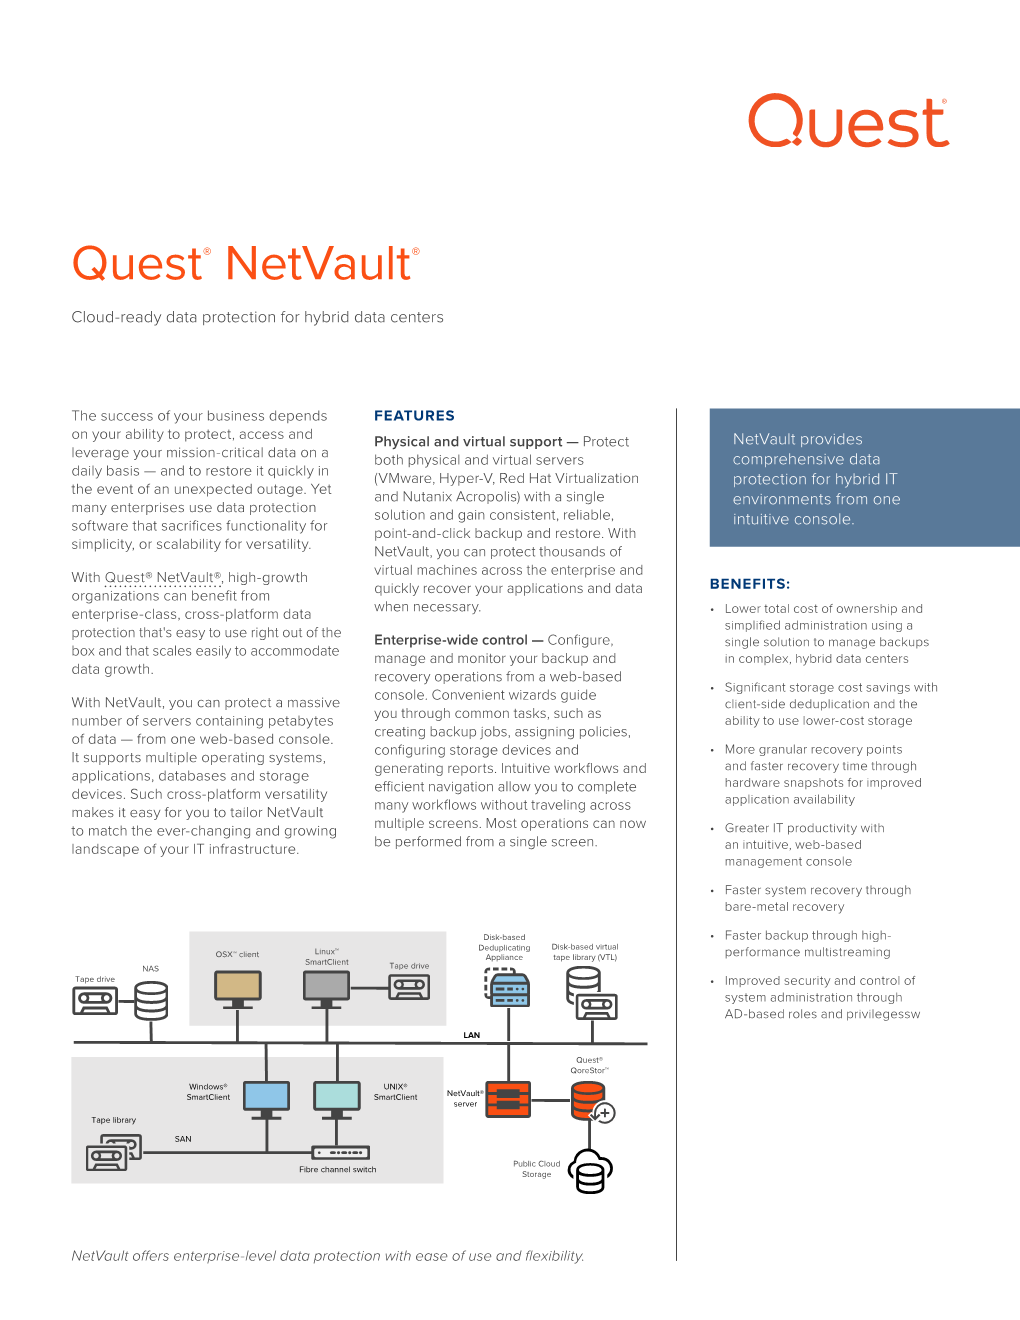 Data Protection | Netvault Backup